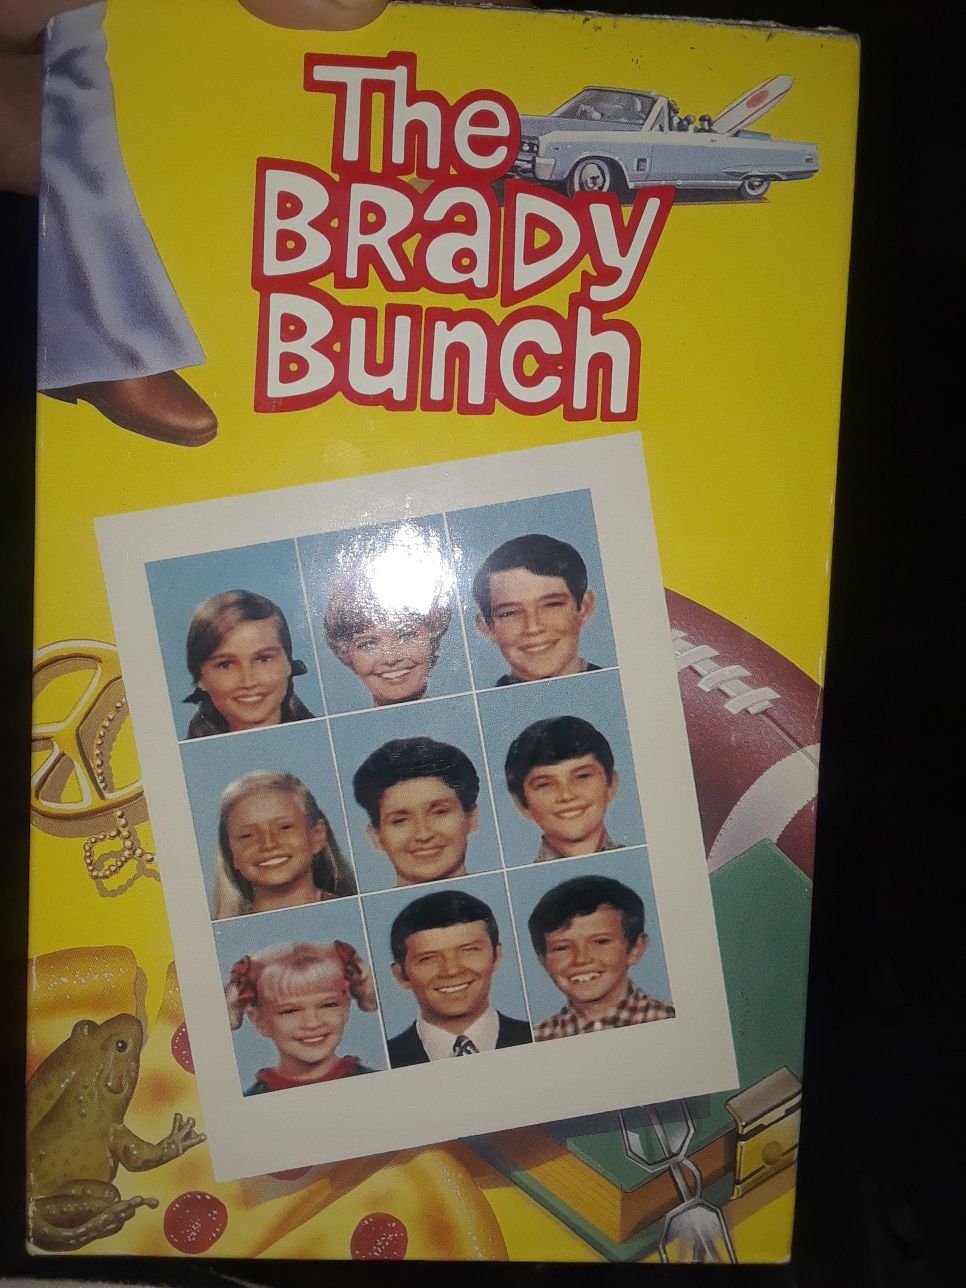 8brady bunch movie VHS